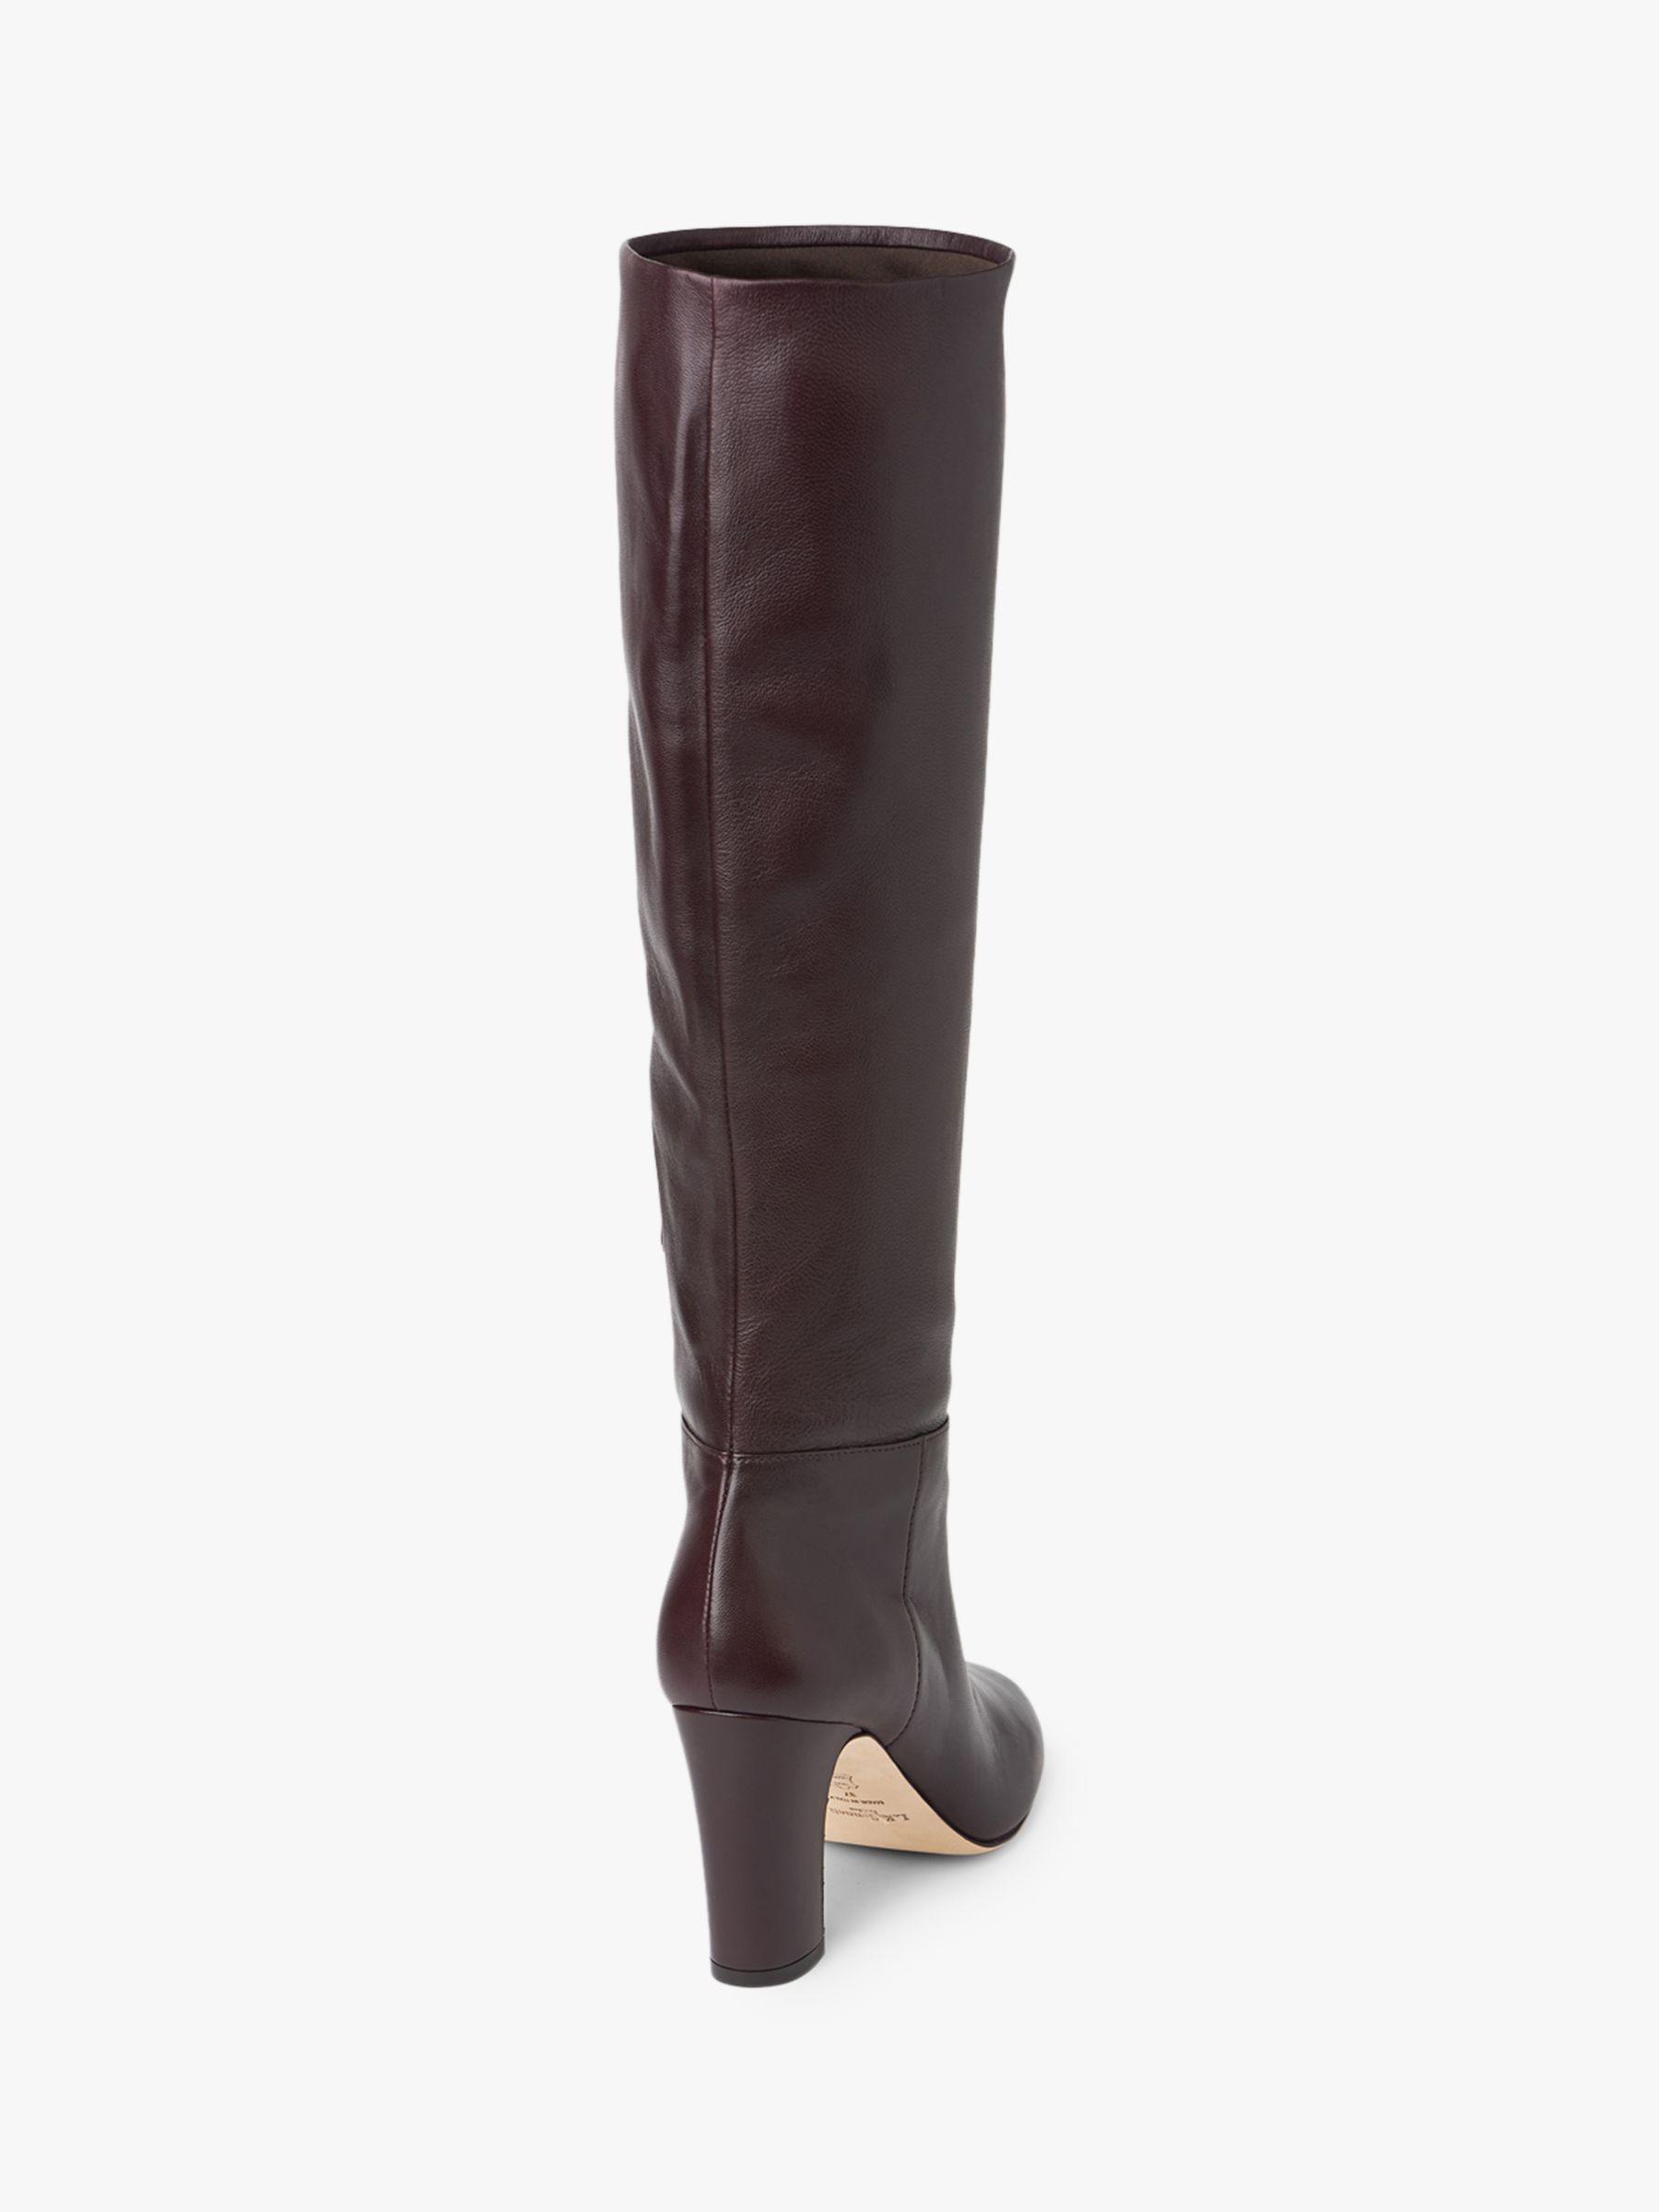 L.K.Bennett Kristen Knee High Boots, Bordeaux Leather